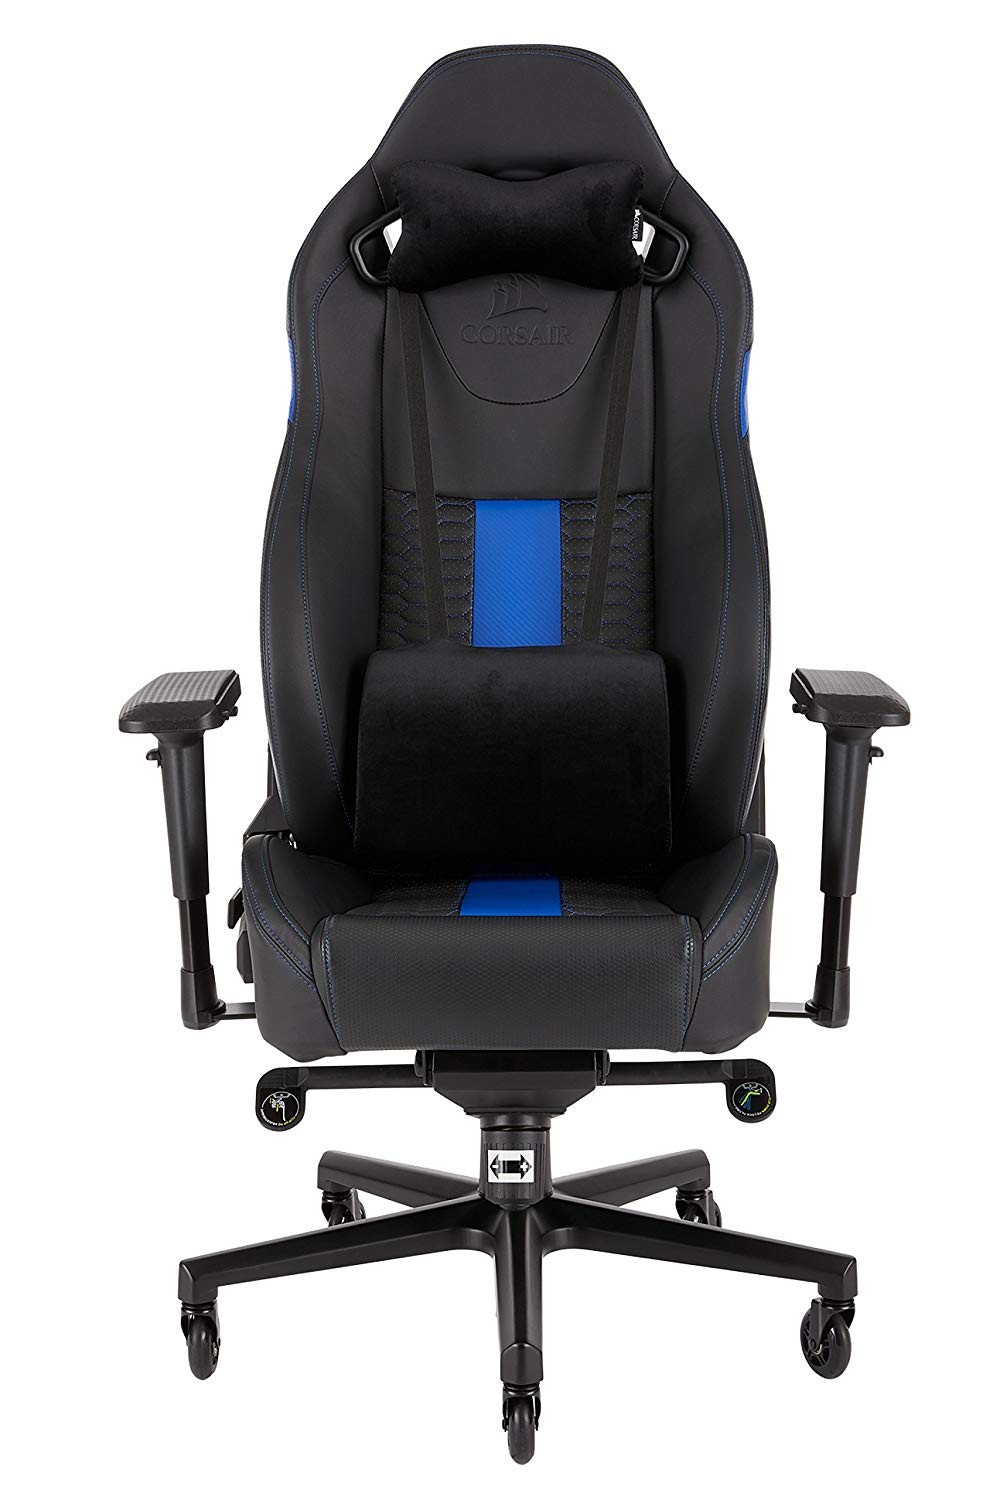 Corsair Cf 9010009 T2 Road Warrior Black Blue Gaming Chair